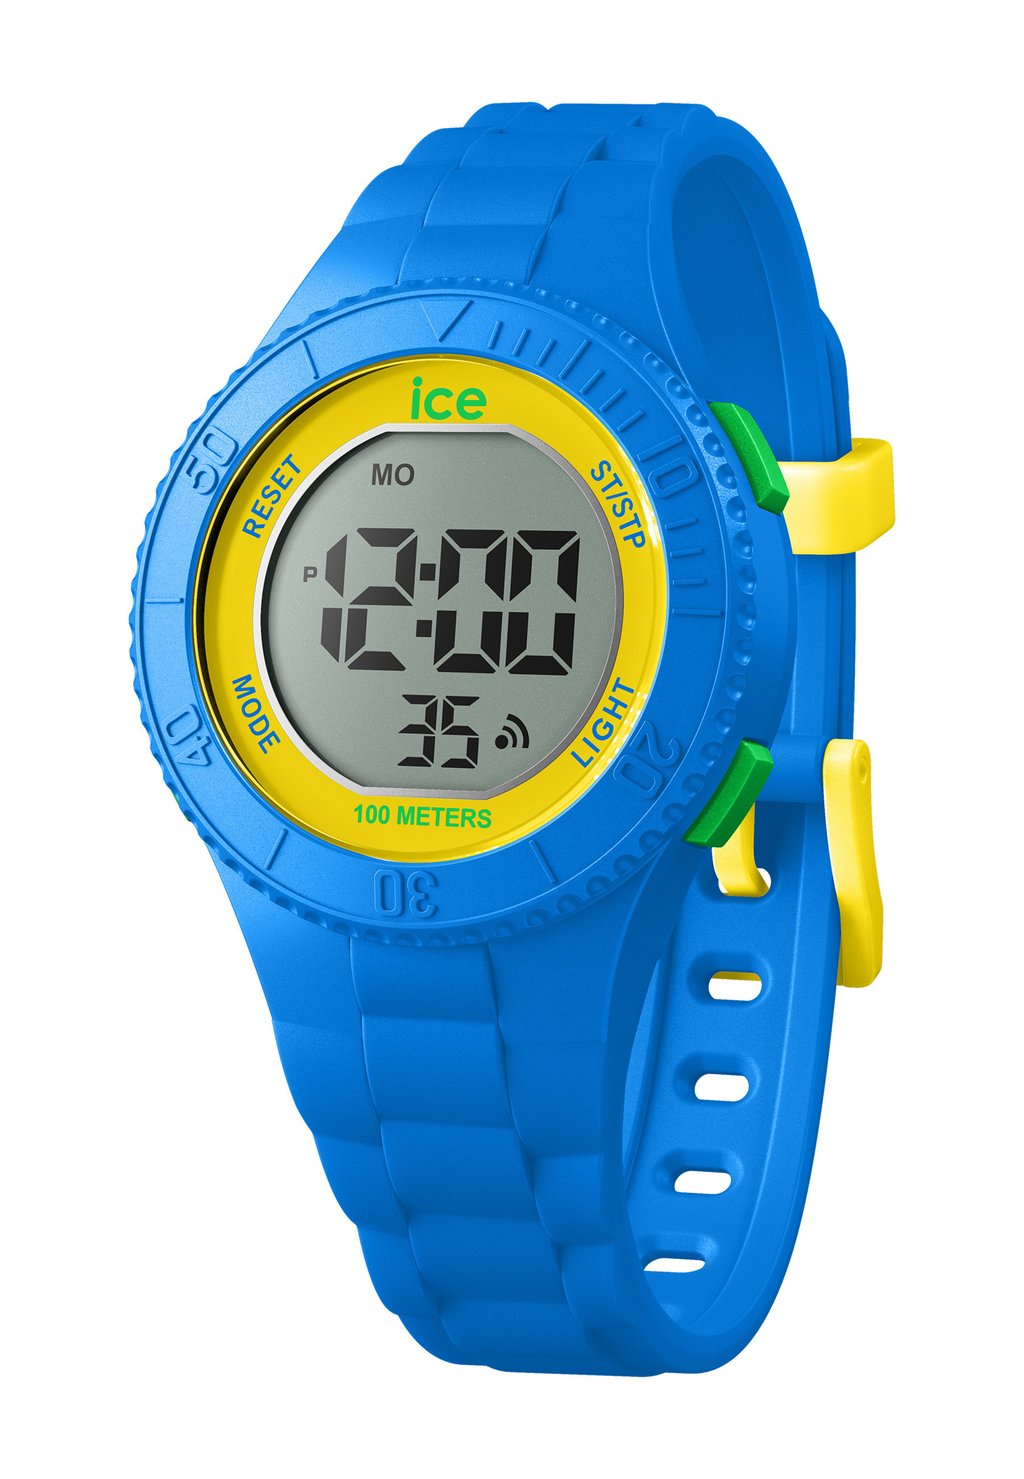 Цифровые часы Ice-Watch, цвет blue/yellow/green s цена и фото